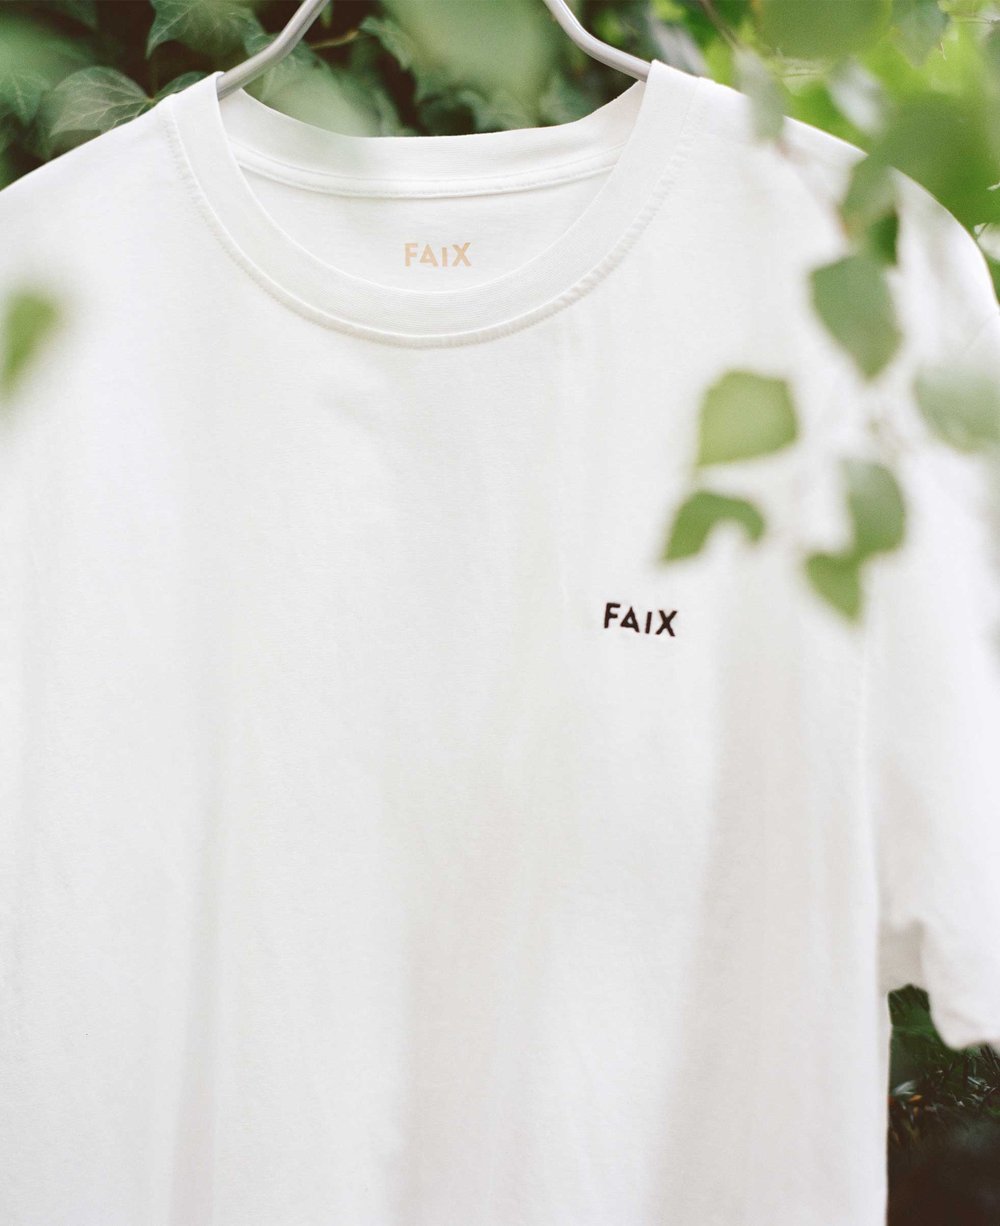 Image of FAIX T-SHIRT / white / NEW